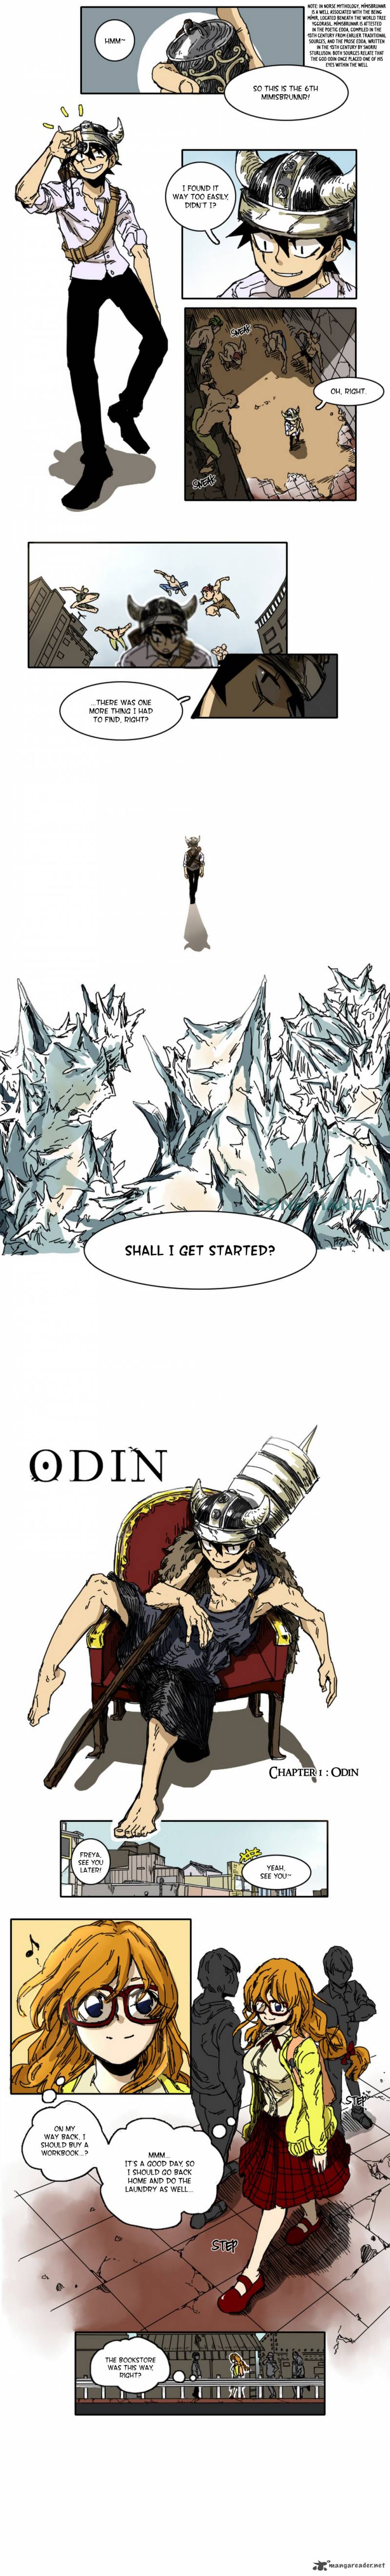 Odin Chapter 1 Page 9